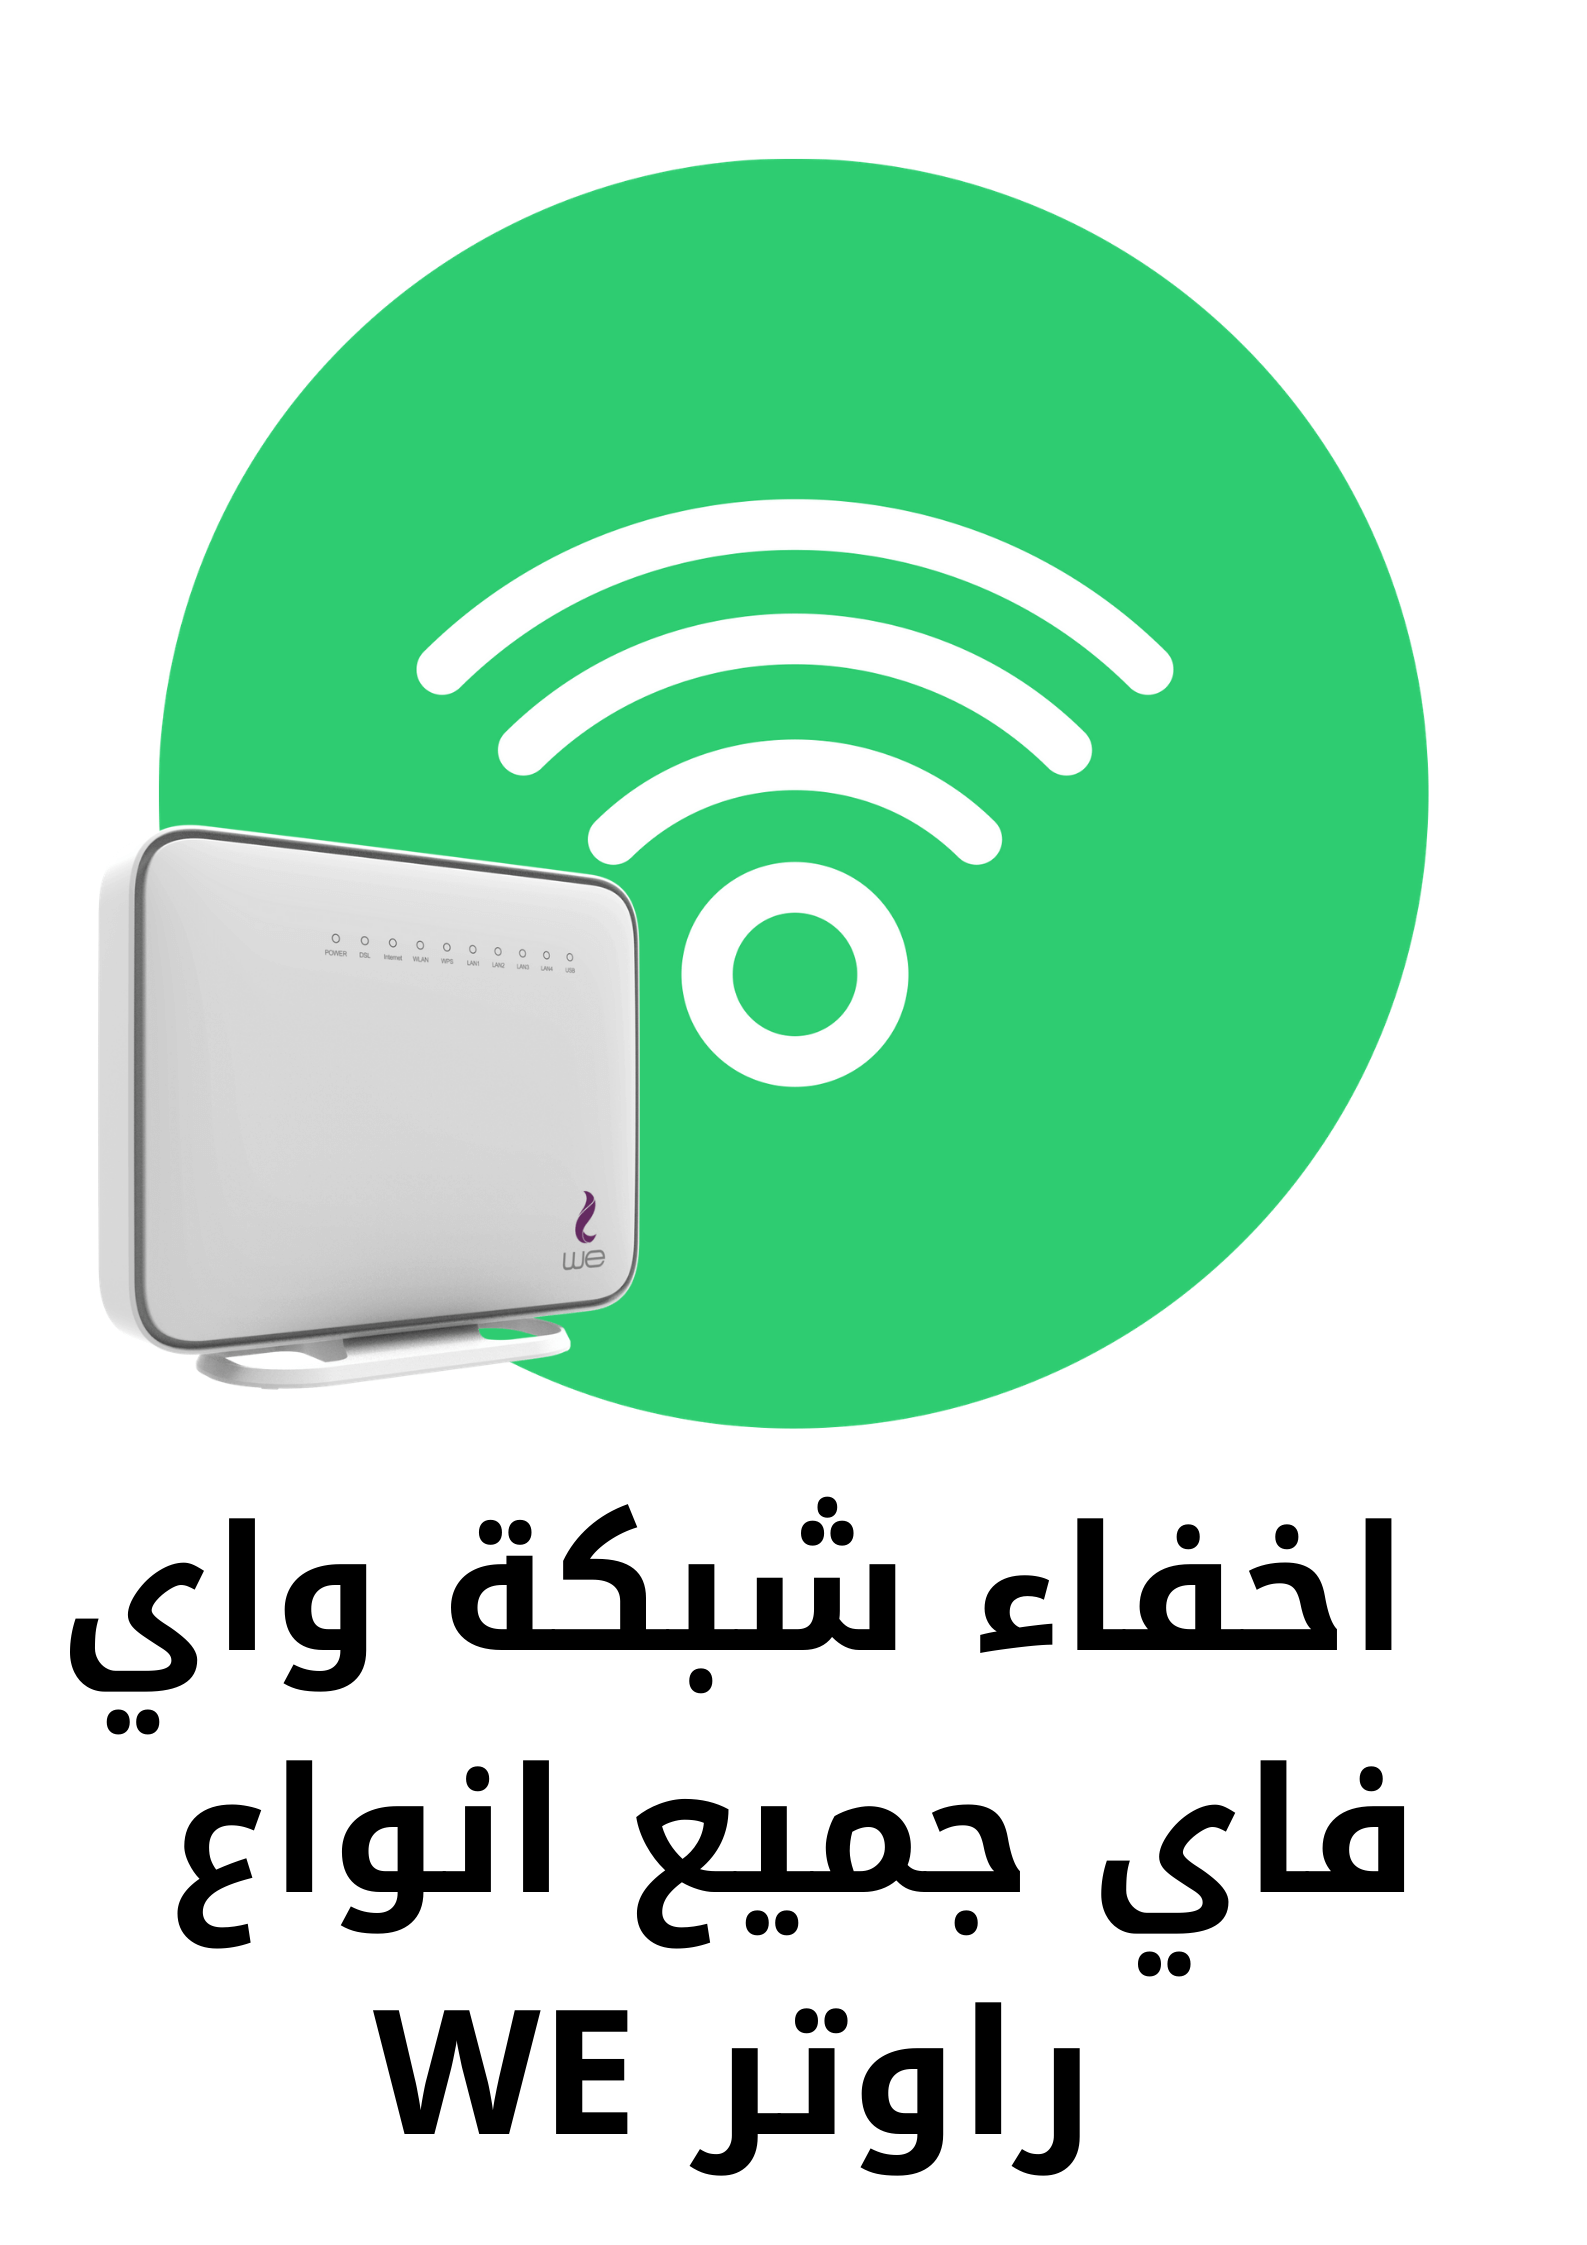 Viga Wi-Fi Router Wi-Fi